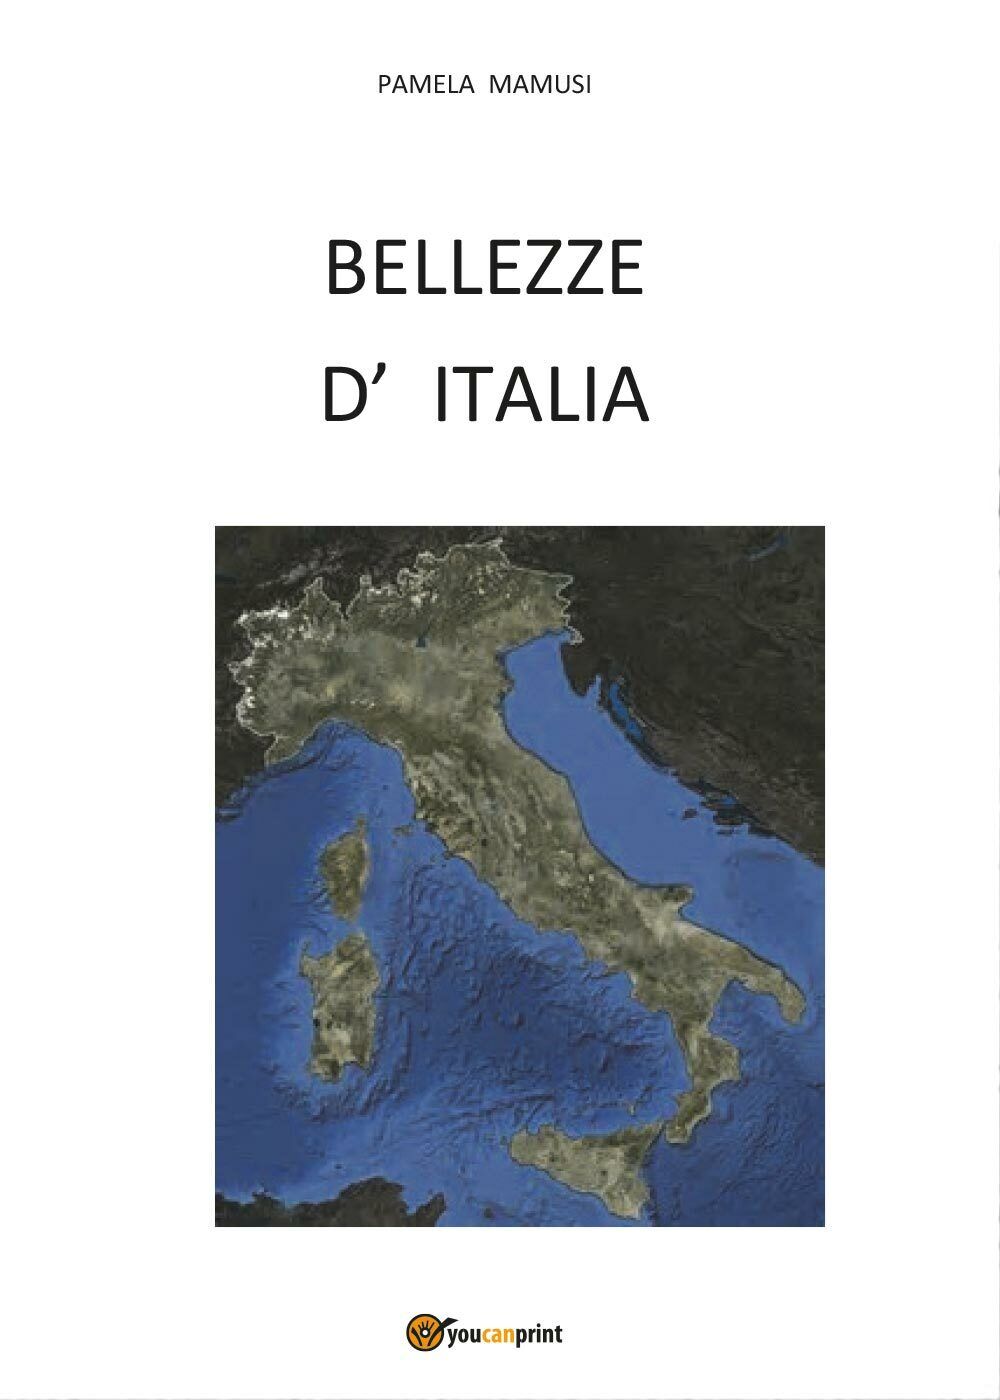 Bellezze d' Italia - Pamela Mamusi,  2017,  Youcanprint - P